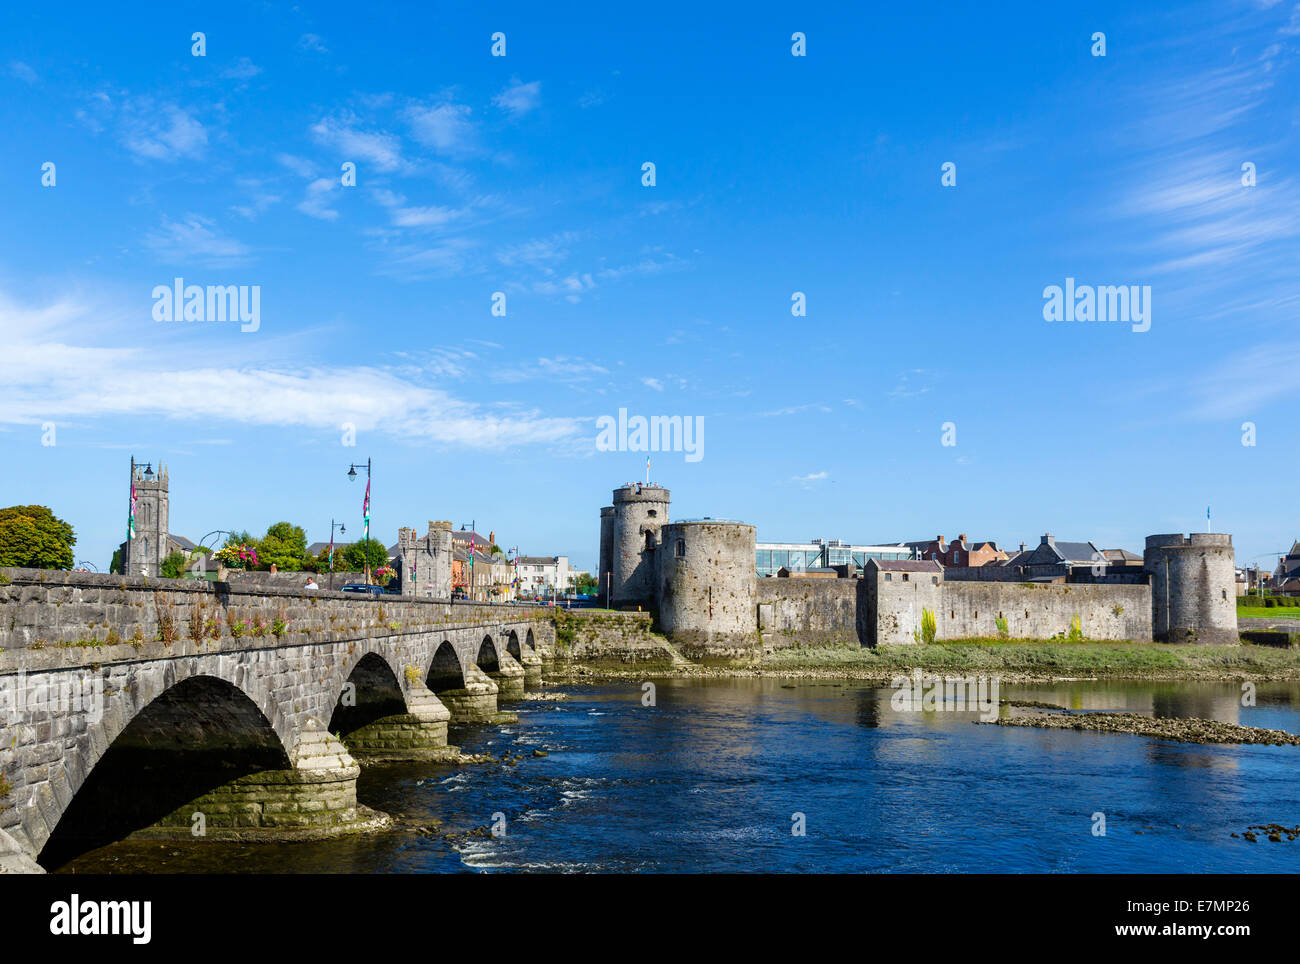 King John's Castle, Thomond Bridge and River Shannon, Limerick City, County Limerick, Republic of Ireland Stock Photo